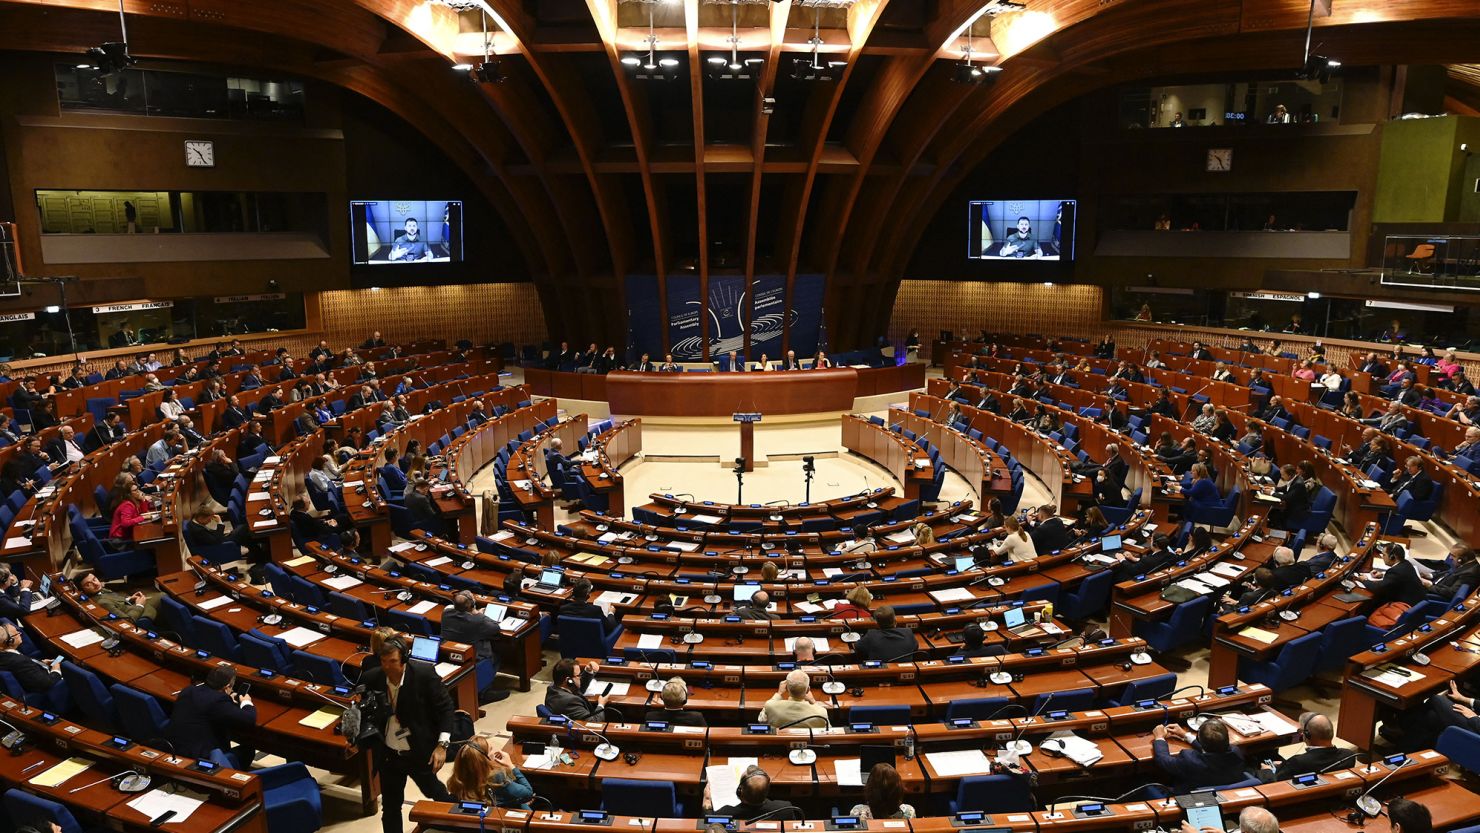 Ukrainian President Volodymyr Zelensky remotely addresses the Council of Europe in Strasbourg, France on October 13, 2022.